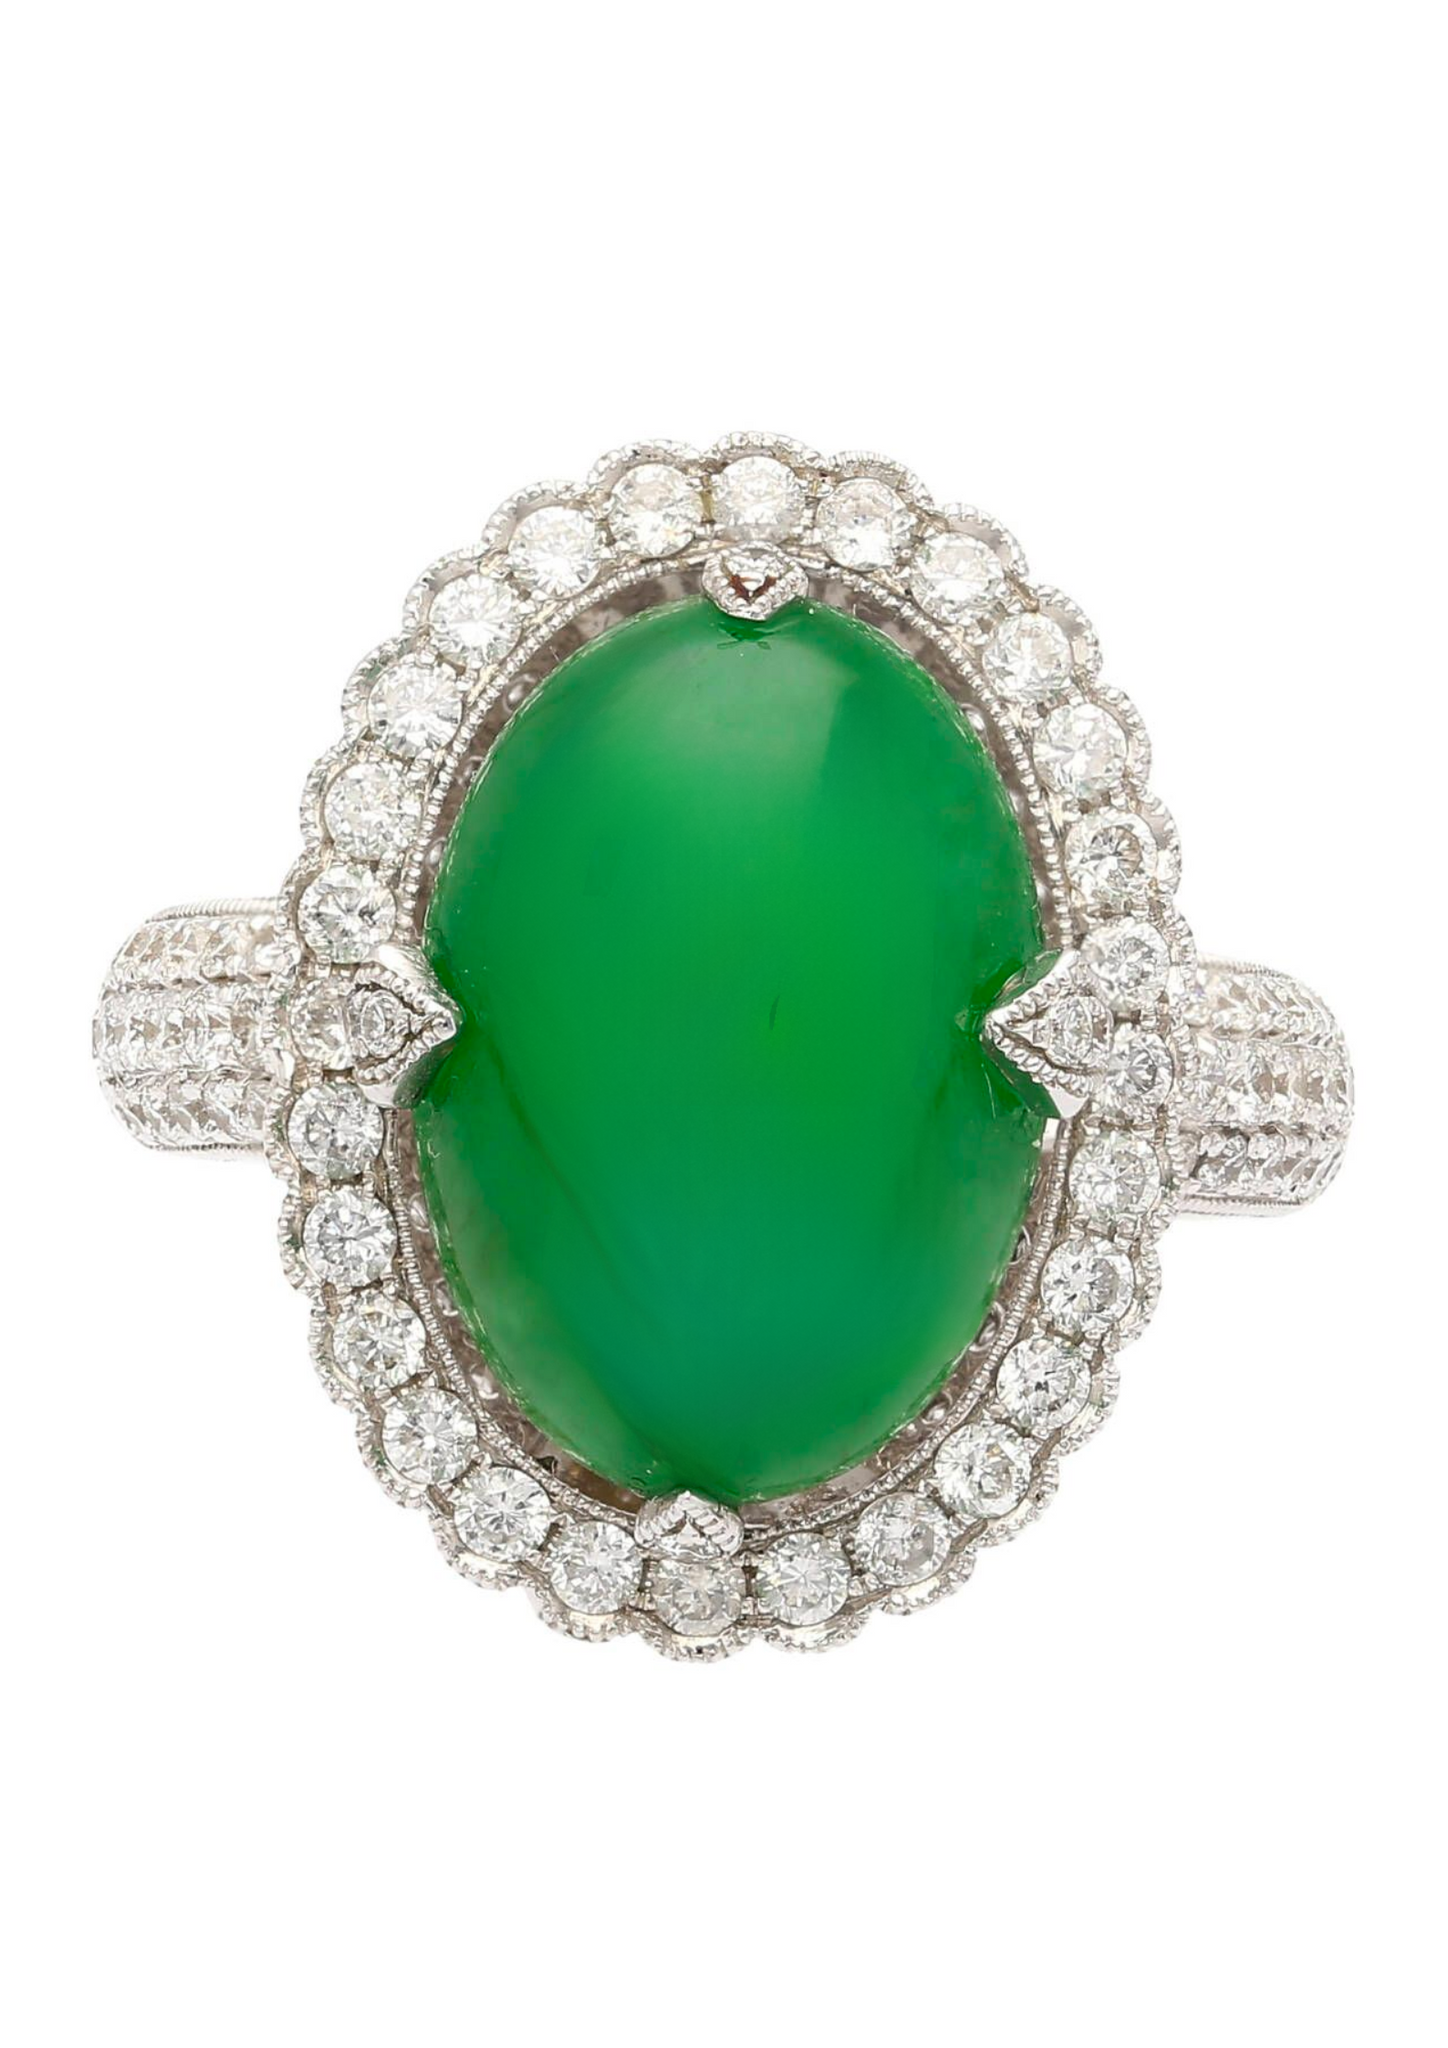 Vintage 7.29 Carat Jadeite Jade "A" Ring with Round Cut Diamond Halo & 18K Milgrain Finish